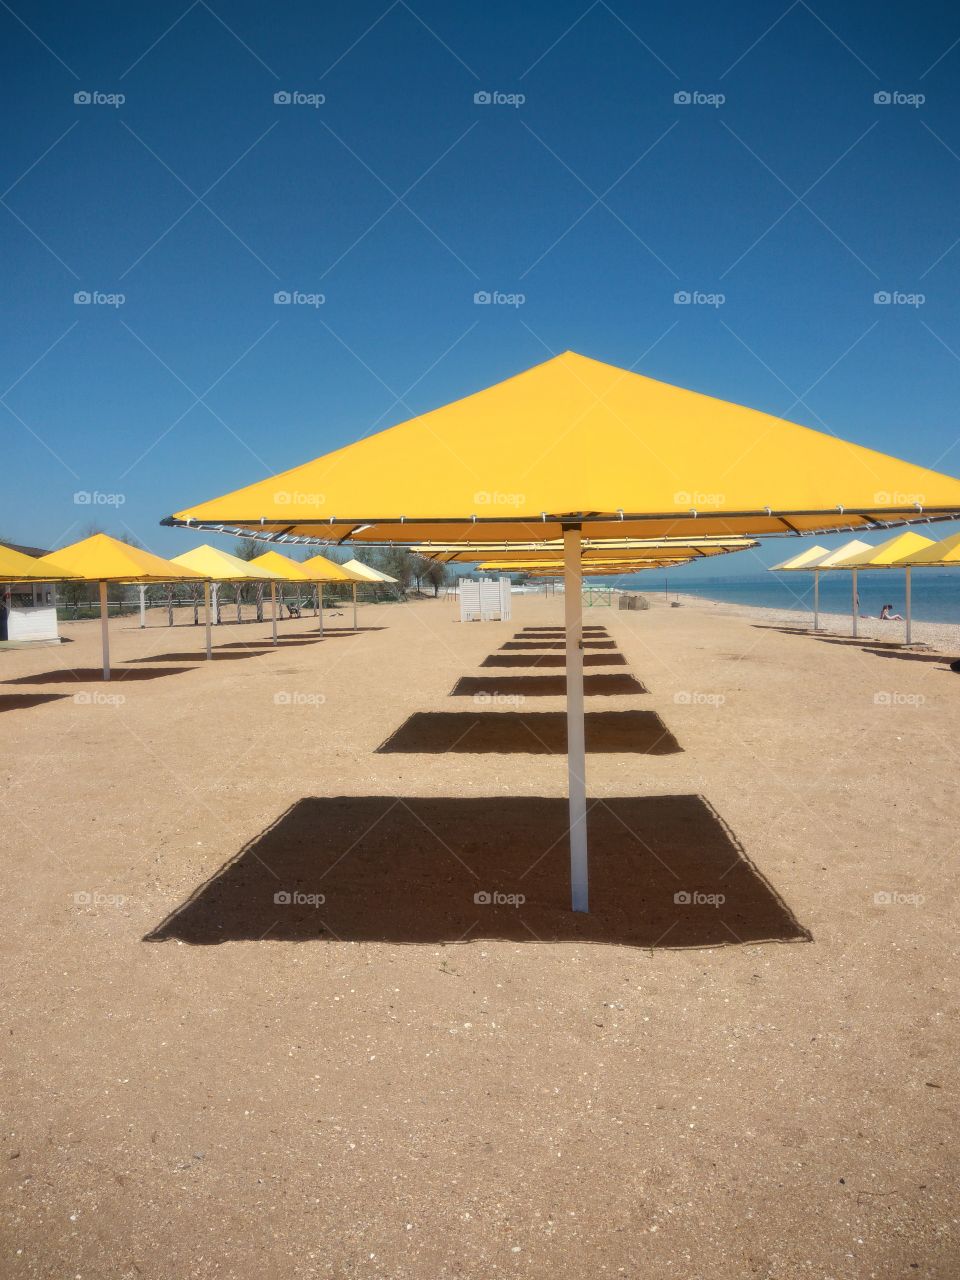 Sun umbrellas on sandy beach in summer